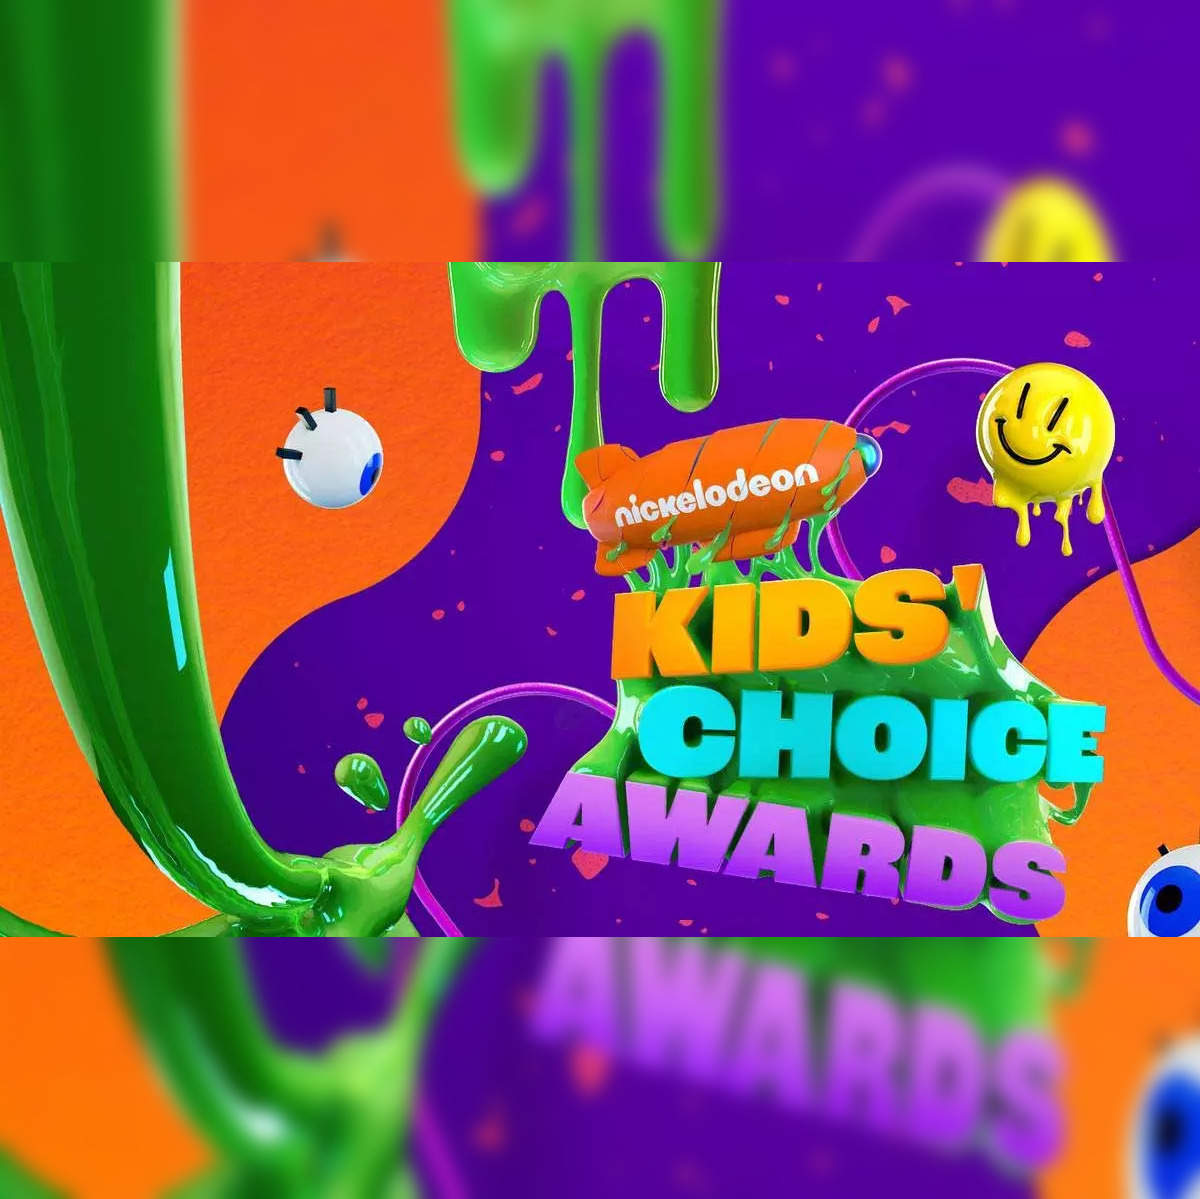 Nickelodeon Kid's Choice Awards: Kevin Hart, Chris Rock, Pharrell